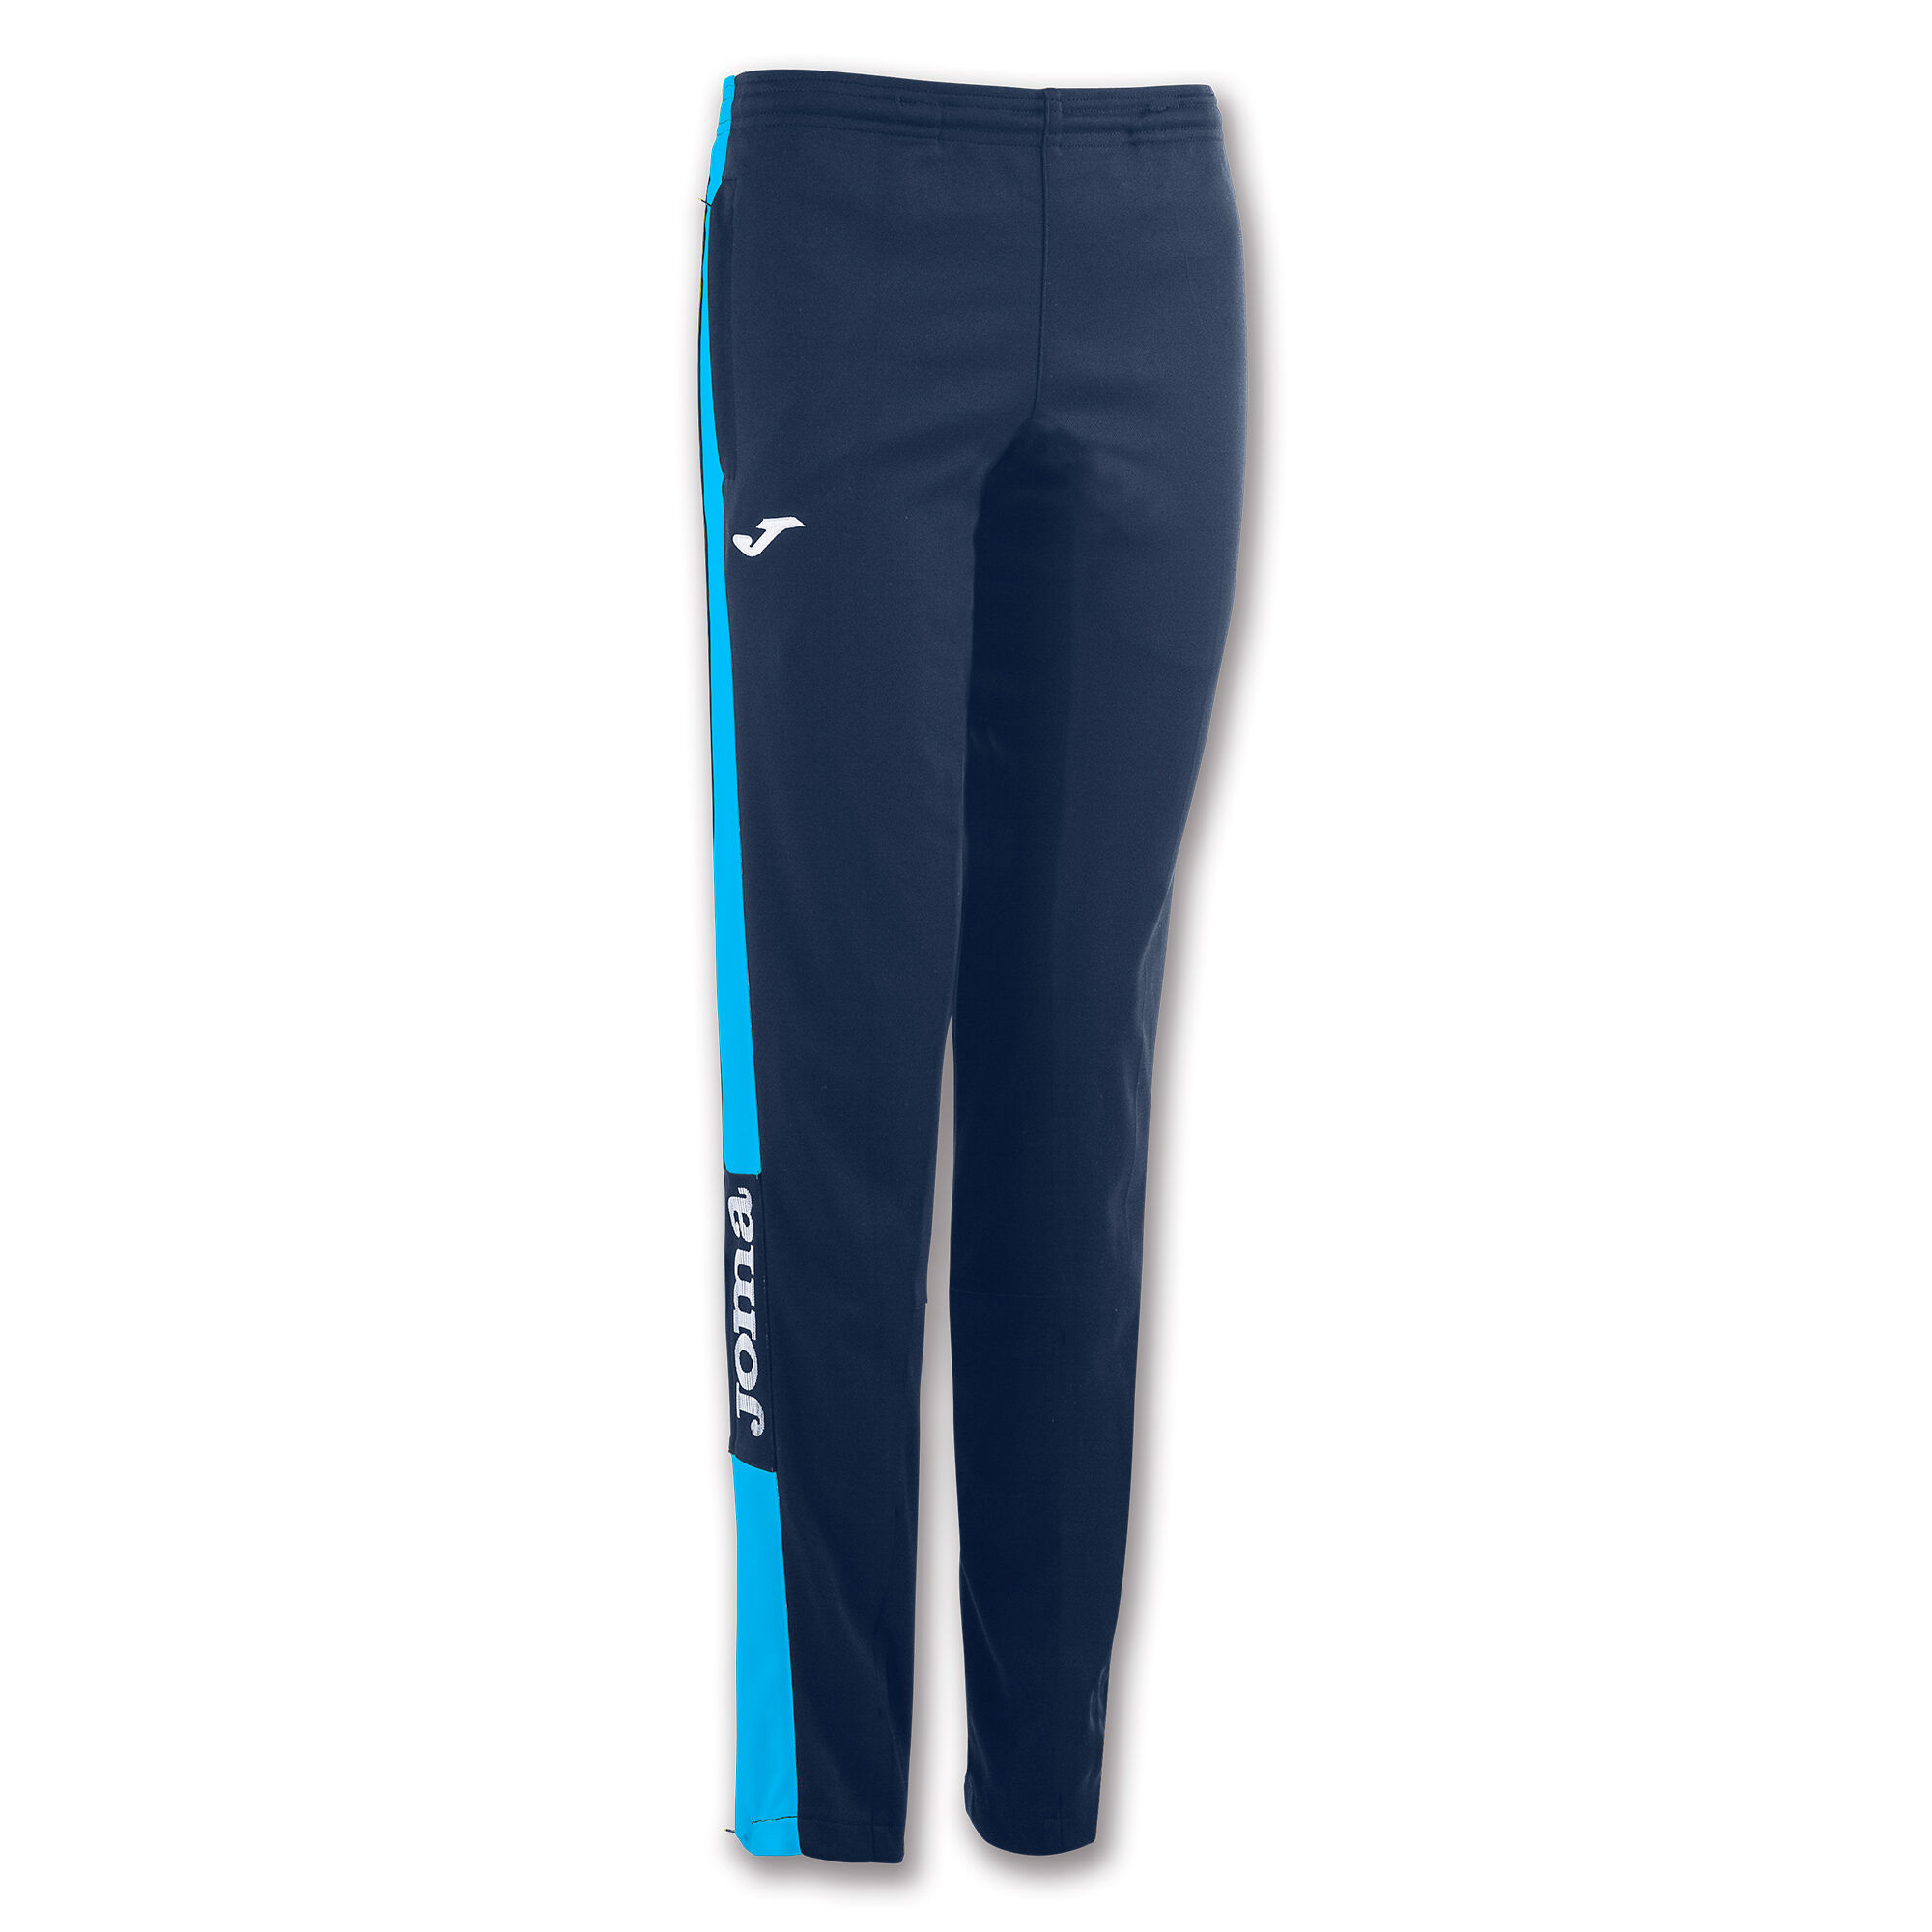 Longs pants woman Championship IV navy blue fluorescent turquoise